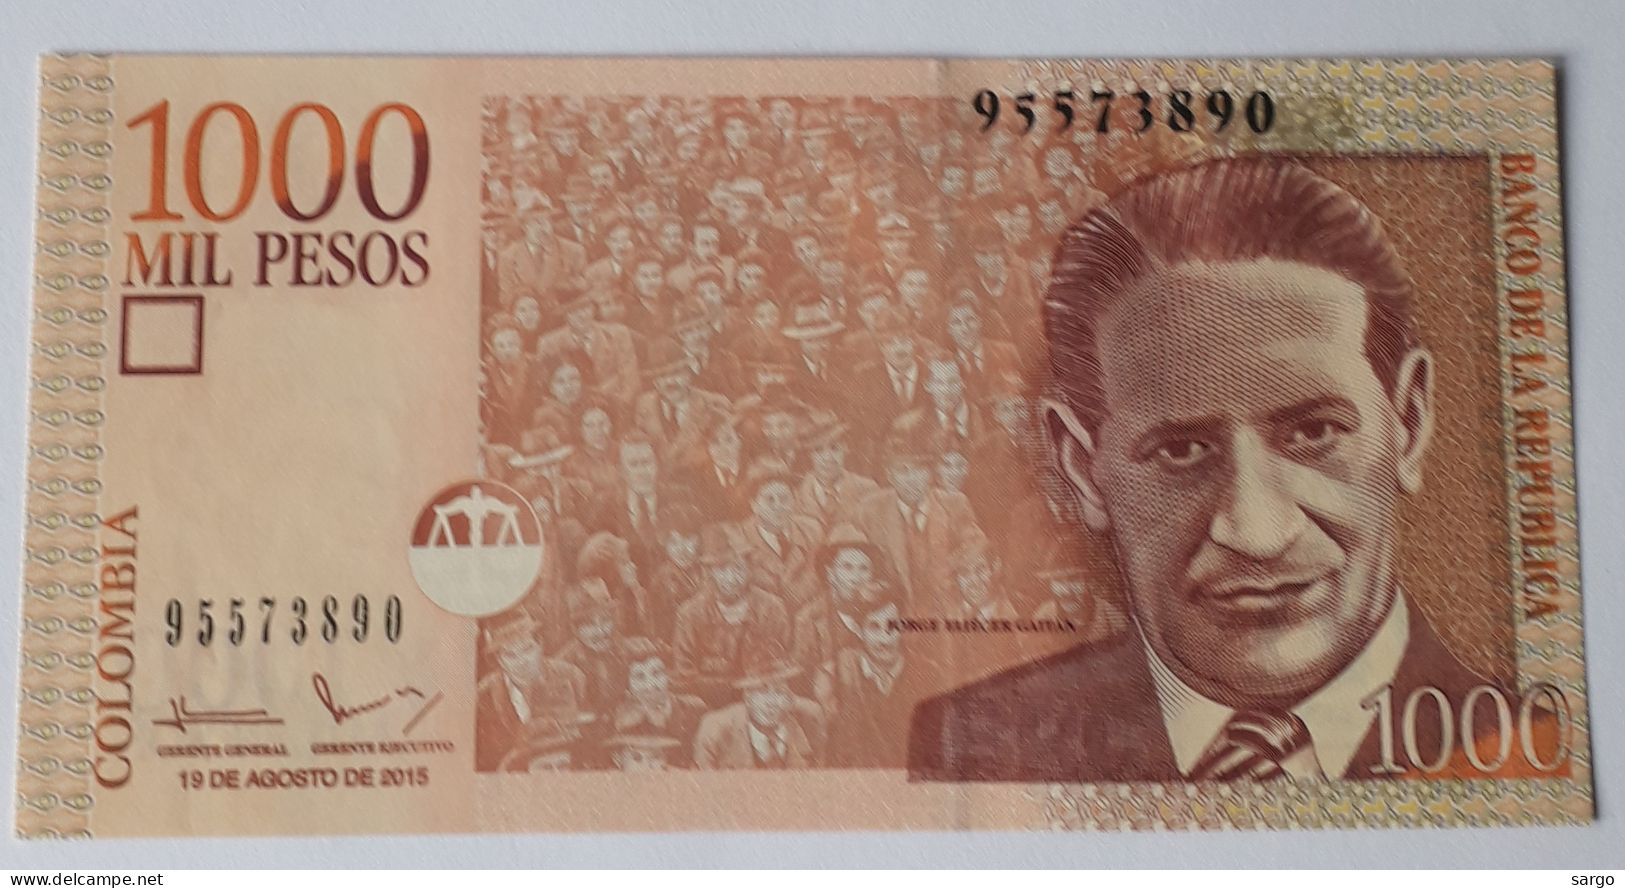 COLOMBIA - 1.000 PESOS - P 456 (2015) - UNC - BANKNOTES - PAPER MONEY - CARTAMONETA - - Colombia